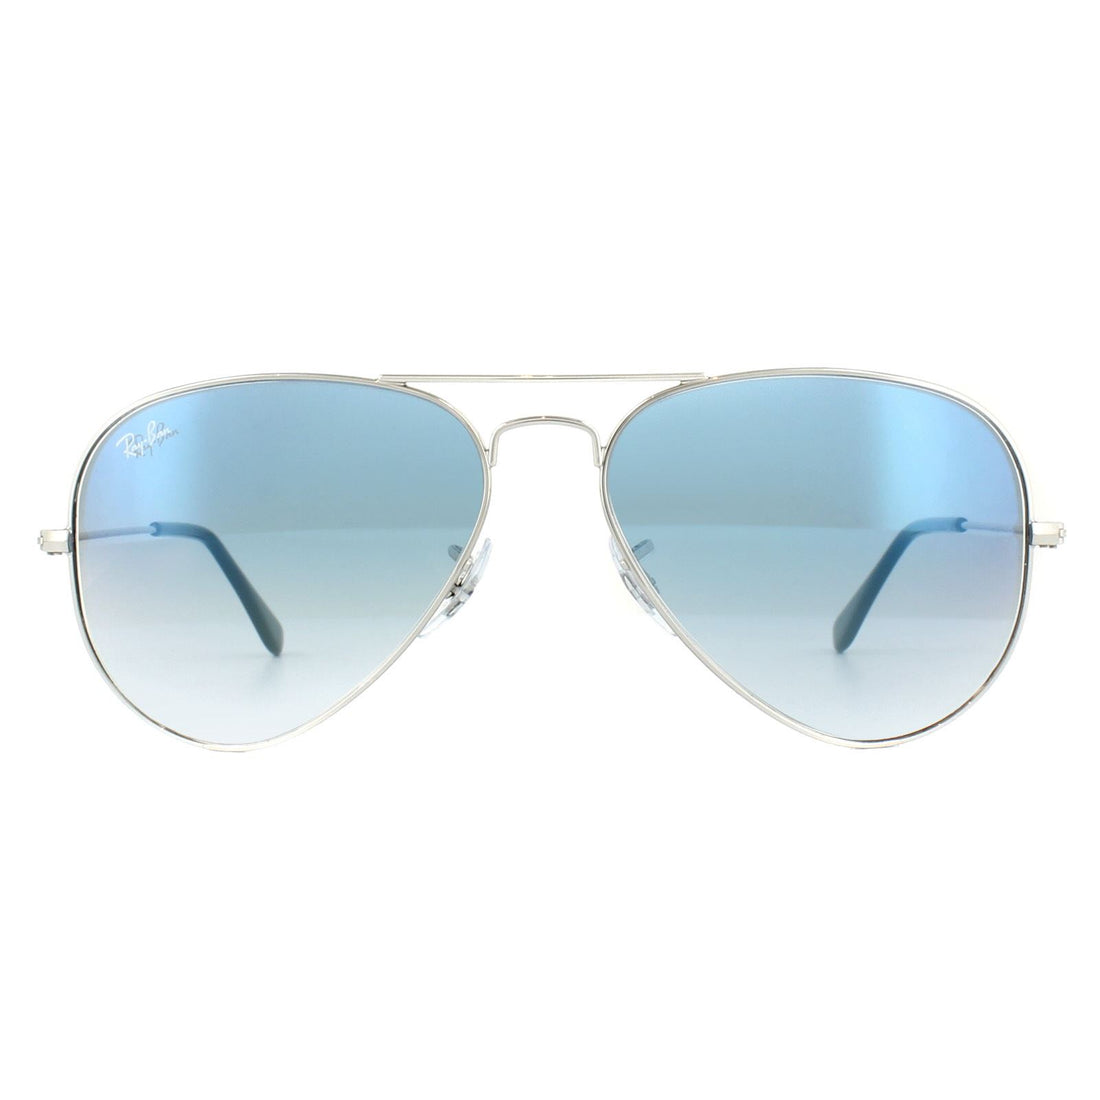 Ray-Ban Aviator Gradient RB3025 Sunglasses Silver / Light Blue Gradient